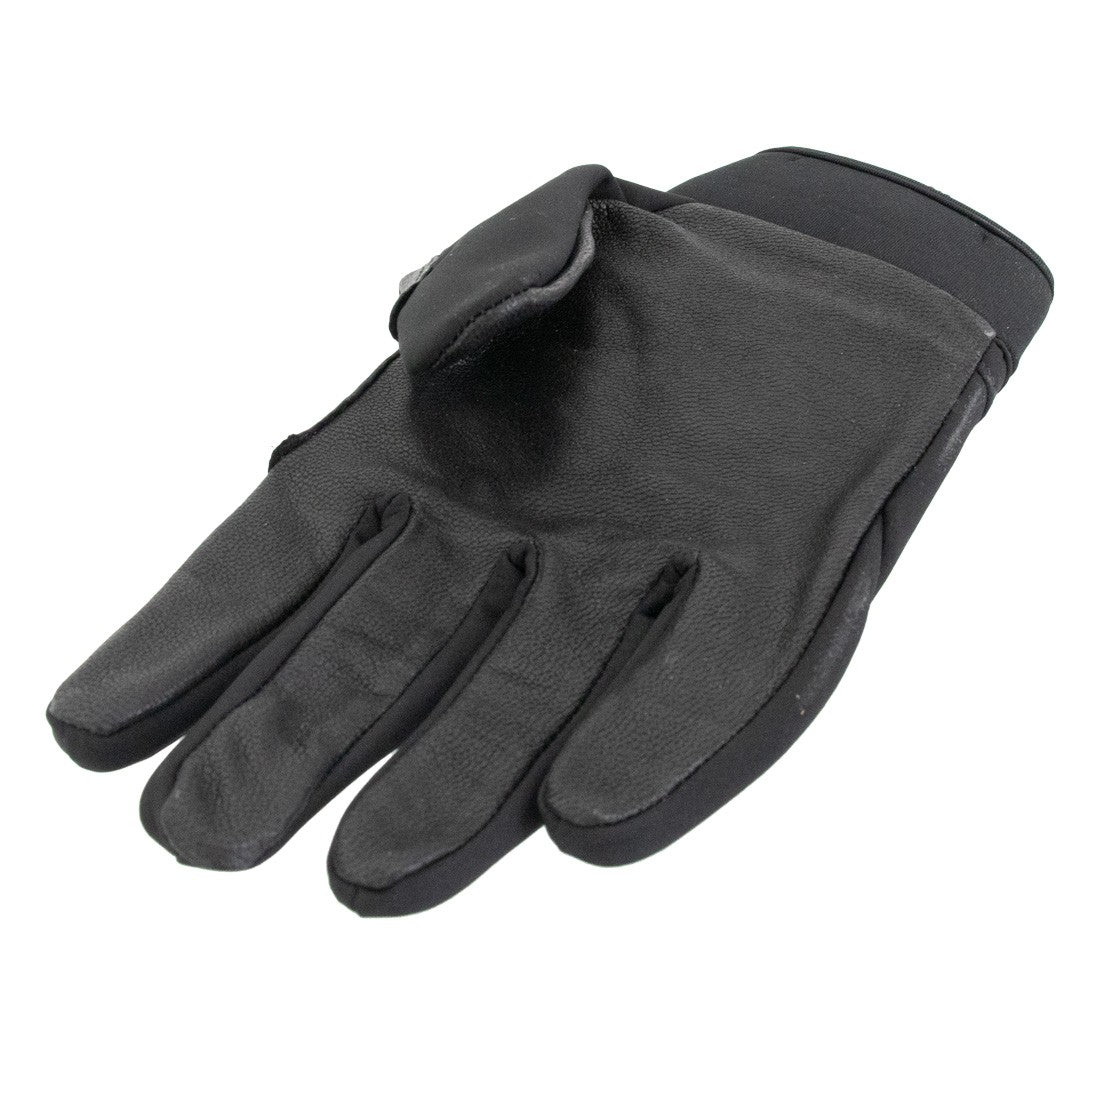 Glacier Glove Guide Gloves Fingertips View